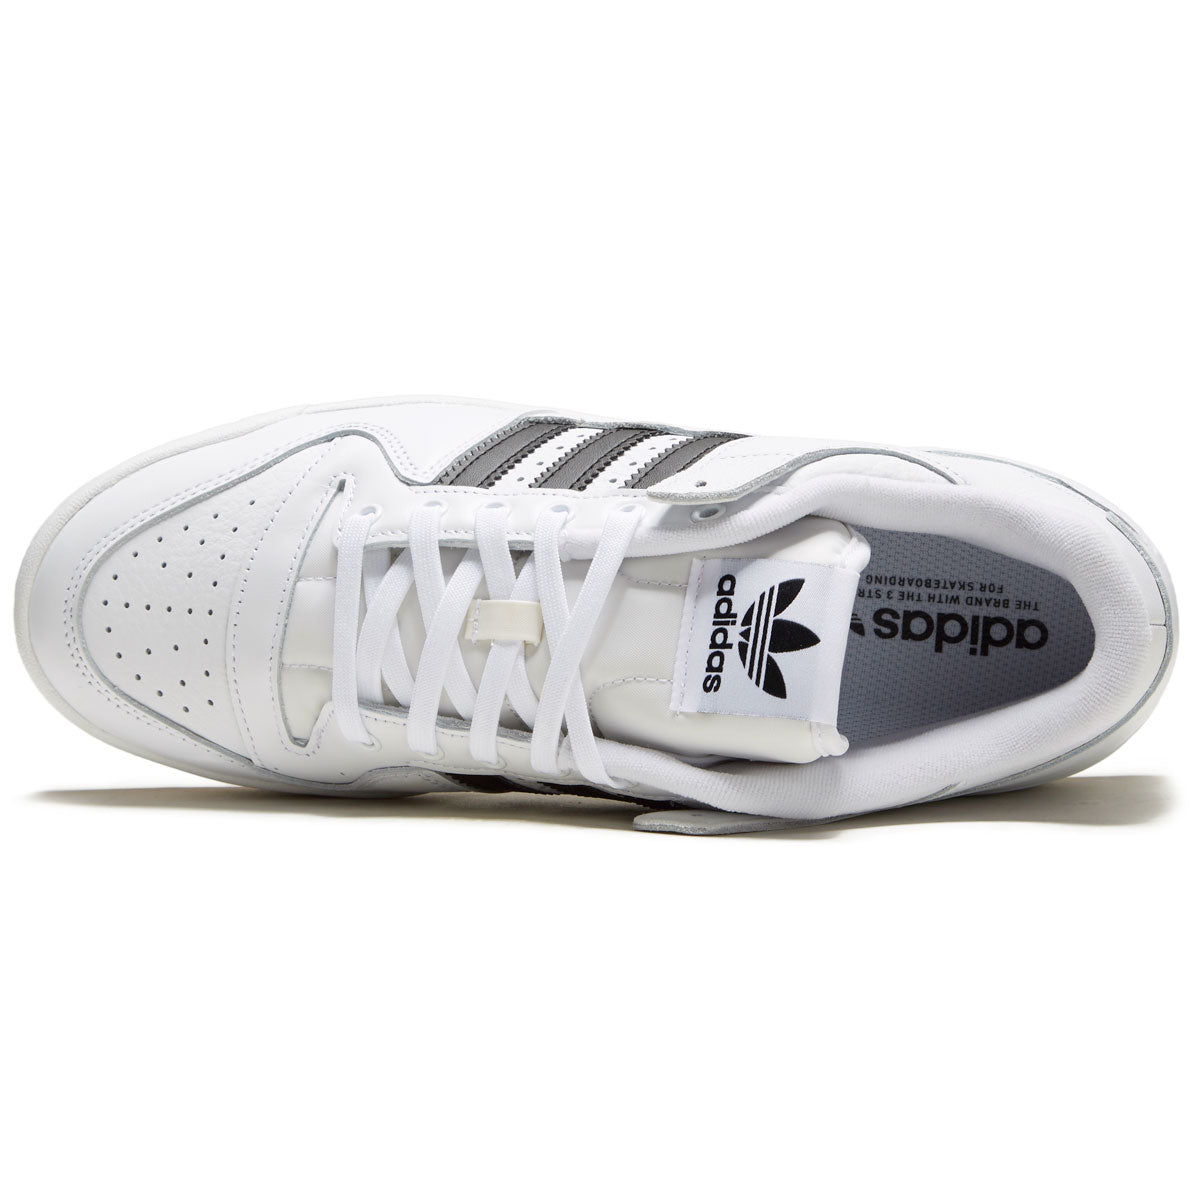 Adidas Forum 84 Low ADV Shoes - White/Core Black/White – CCS